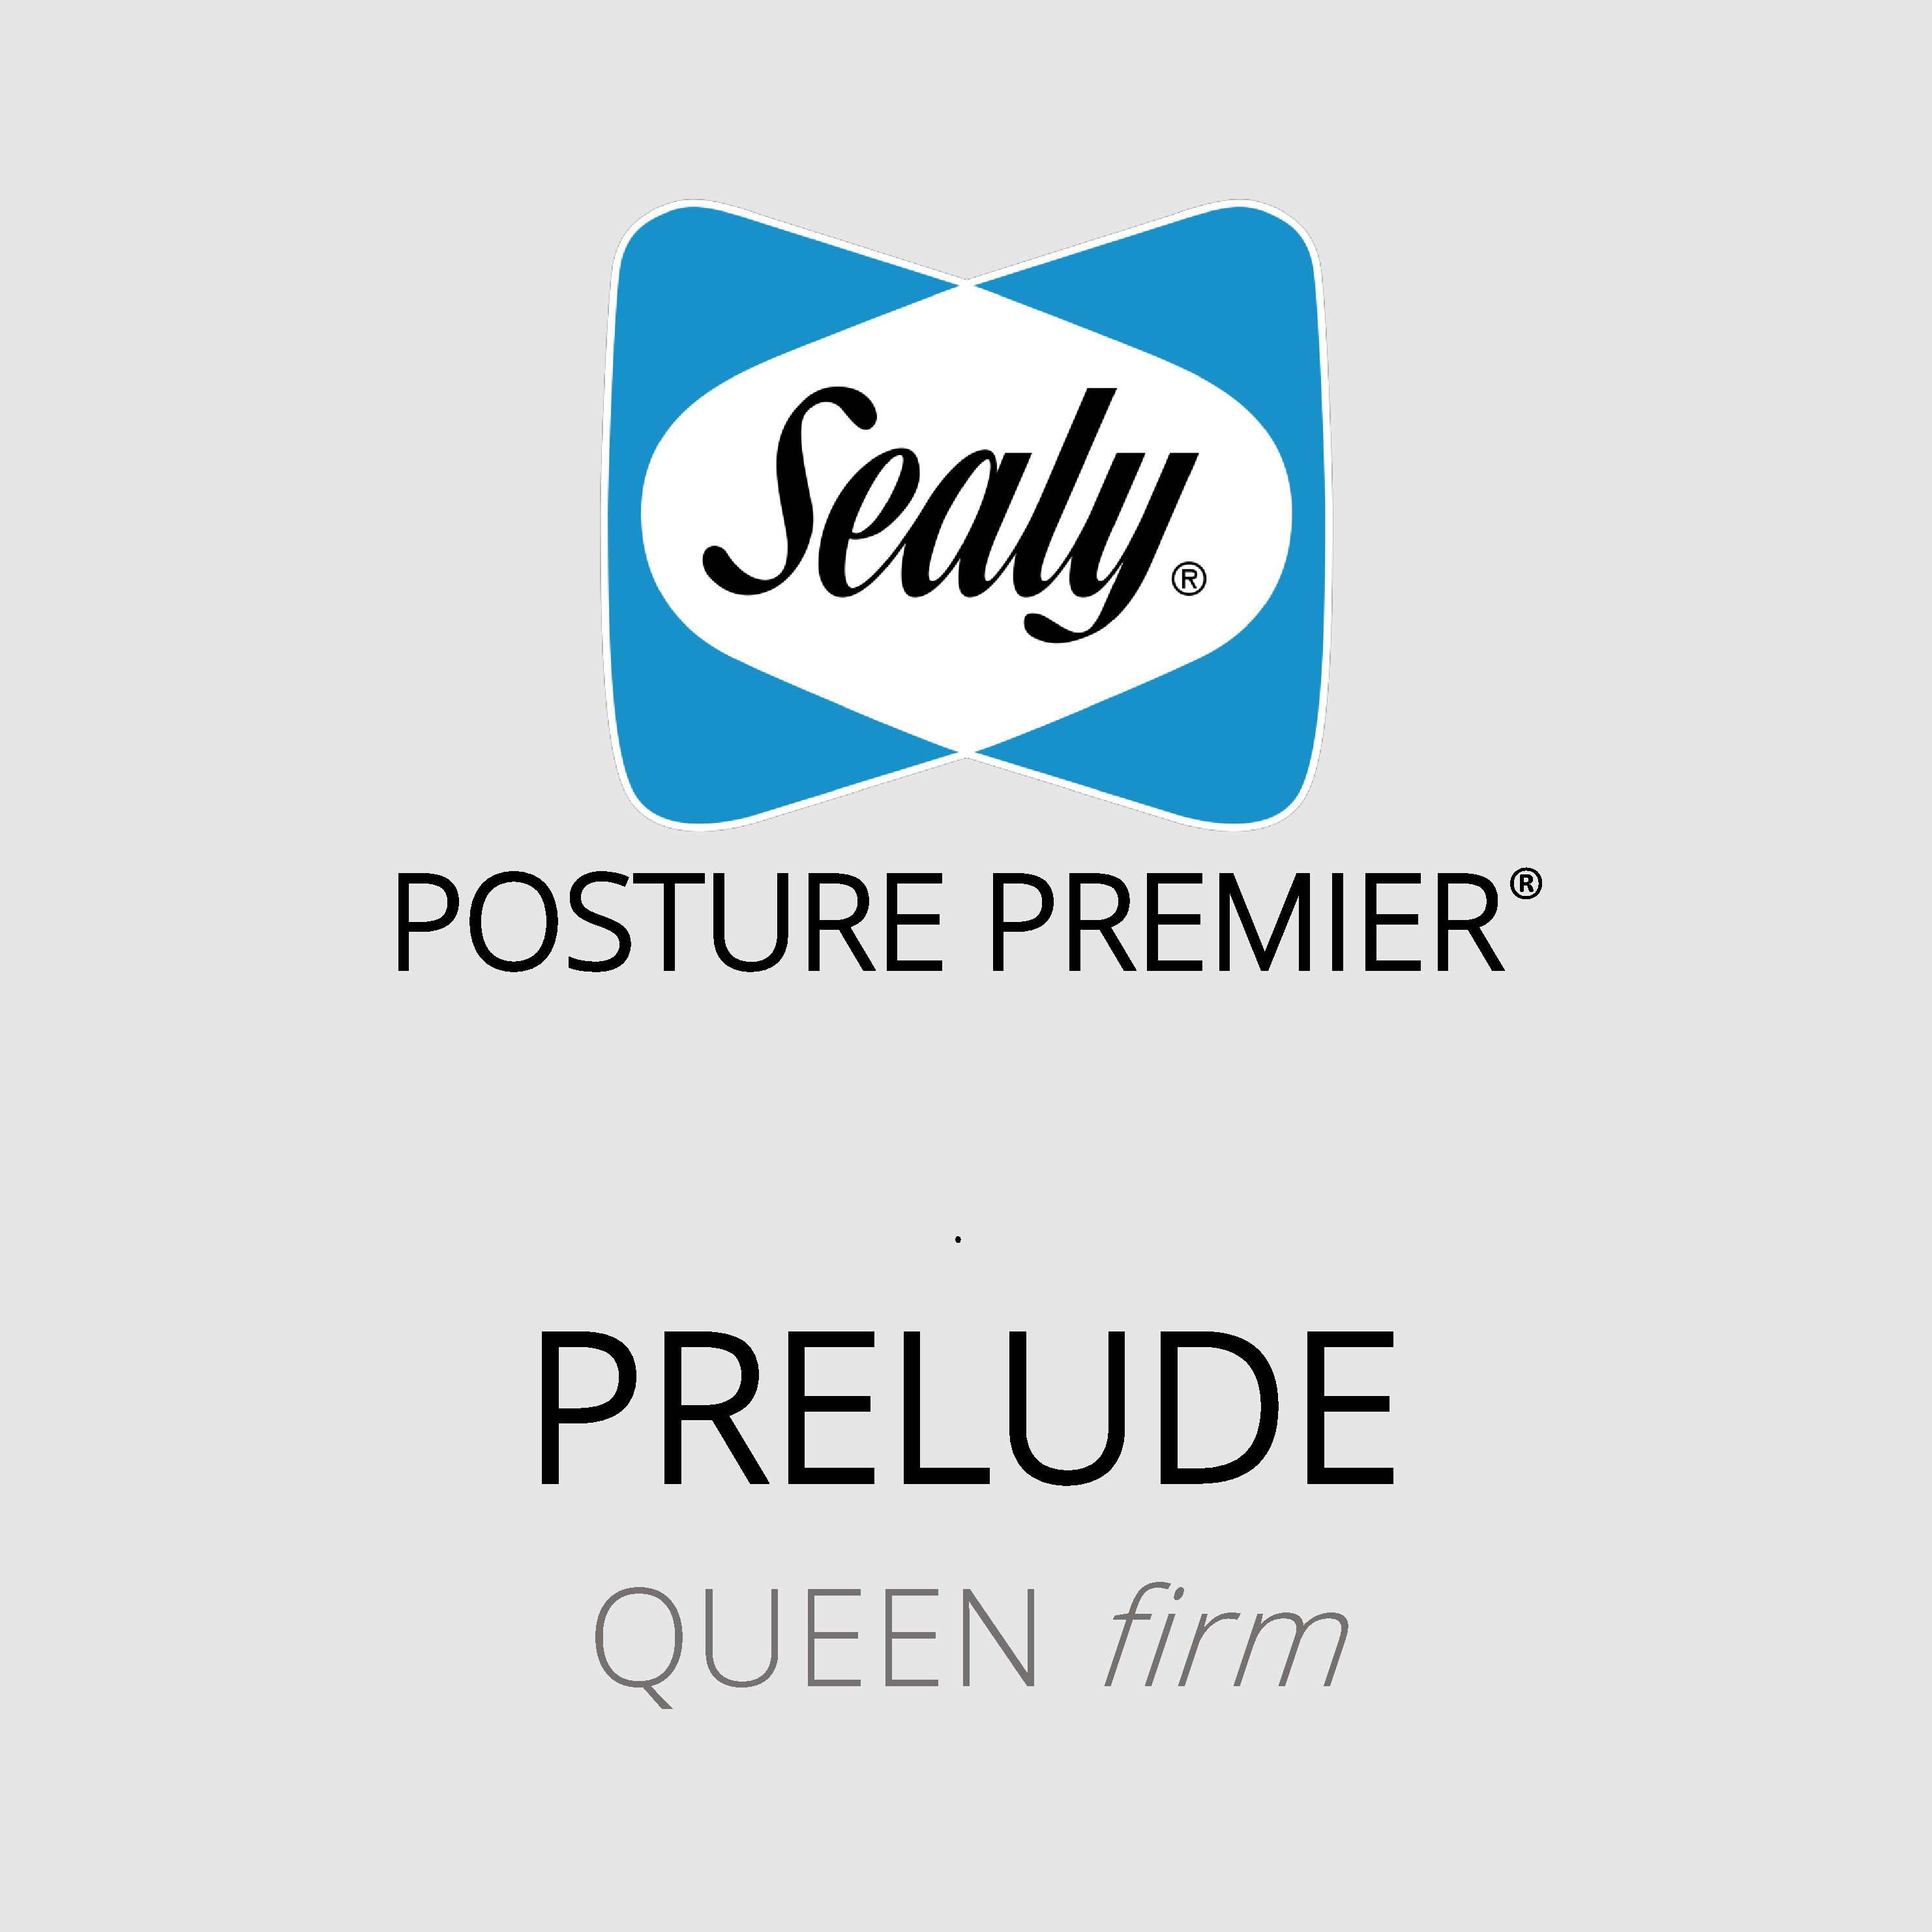 sealy posture premier base